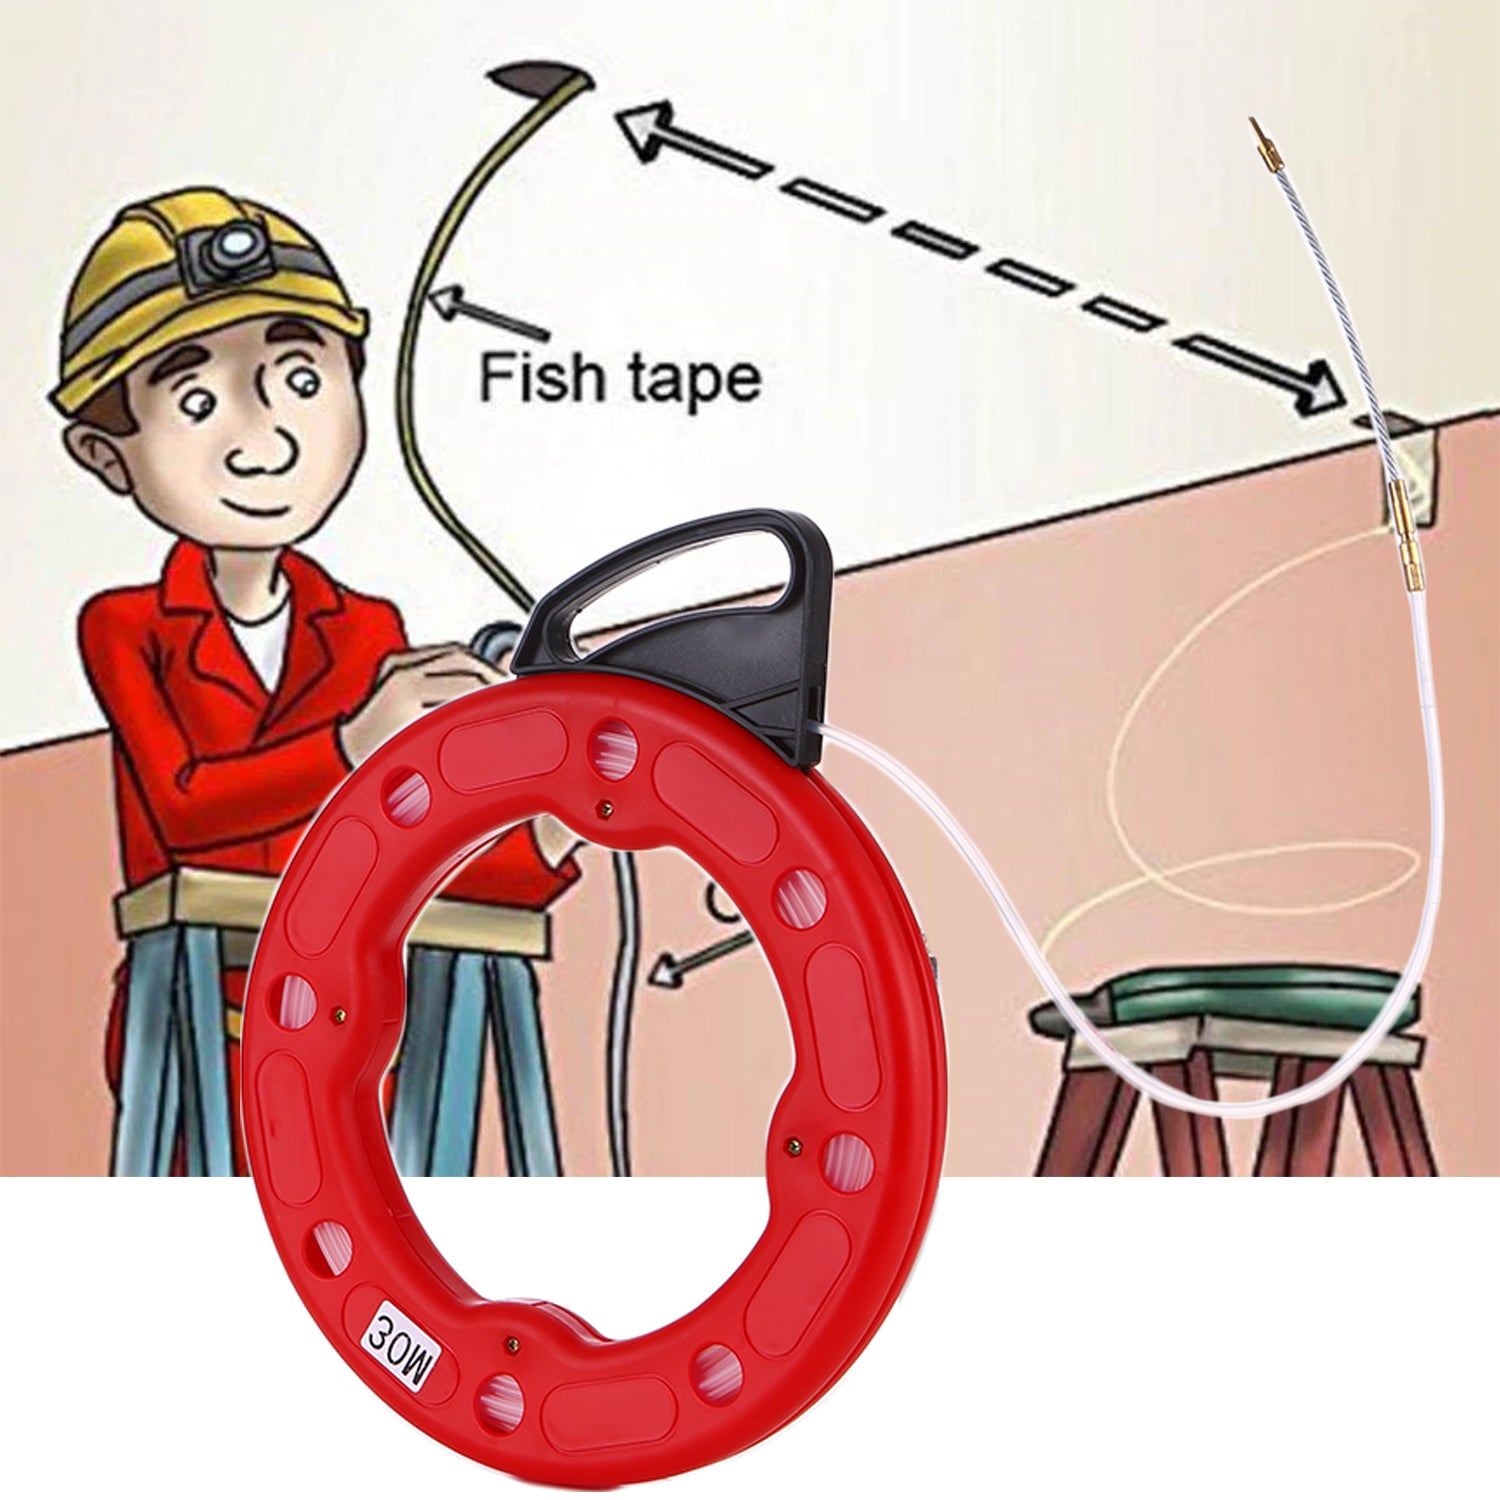 30M Fiberglass Fish Tape Reel Puller Conductive Electrical - 30M